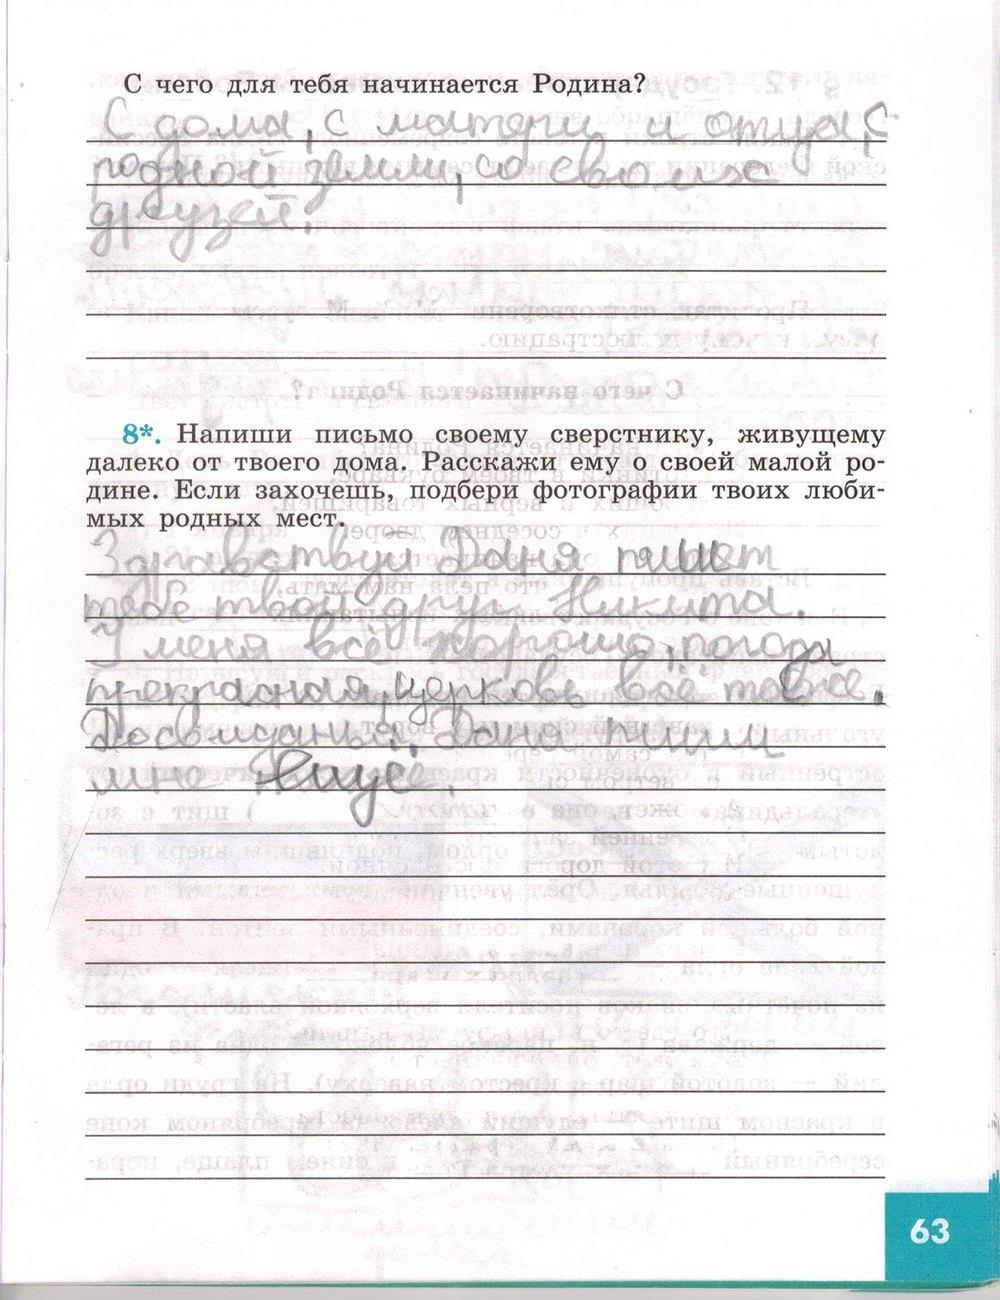 гдз 5 класс рабочая тетрадь страница 63 обществознание Иванова, Хотеенкова